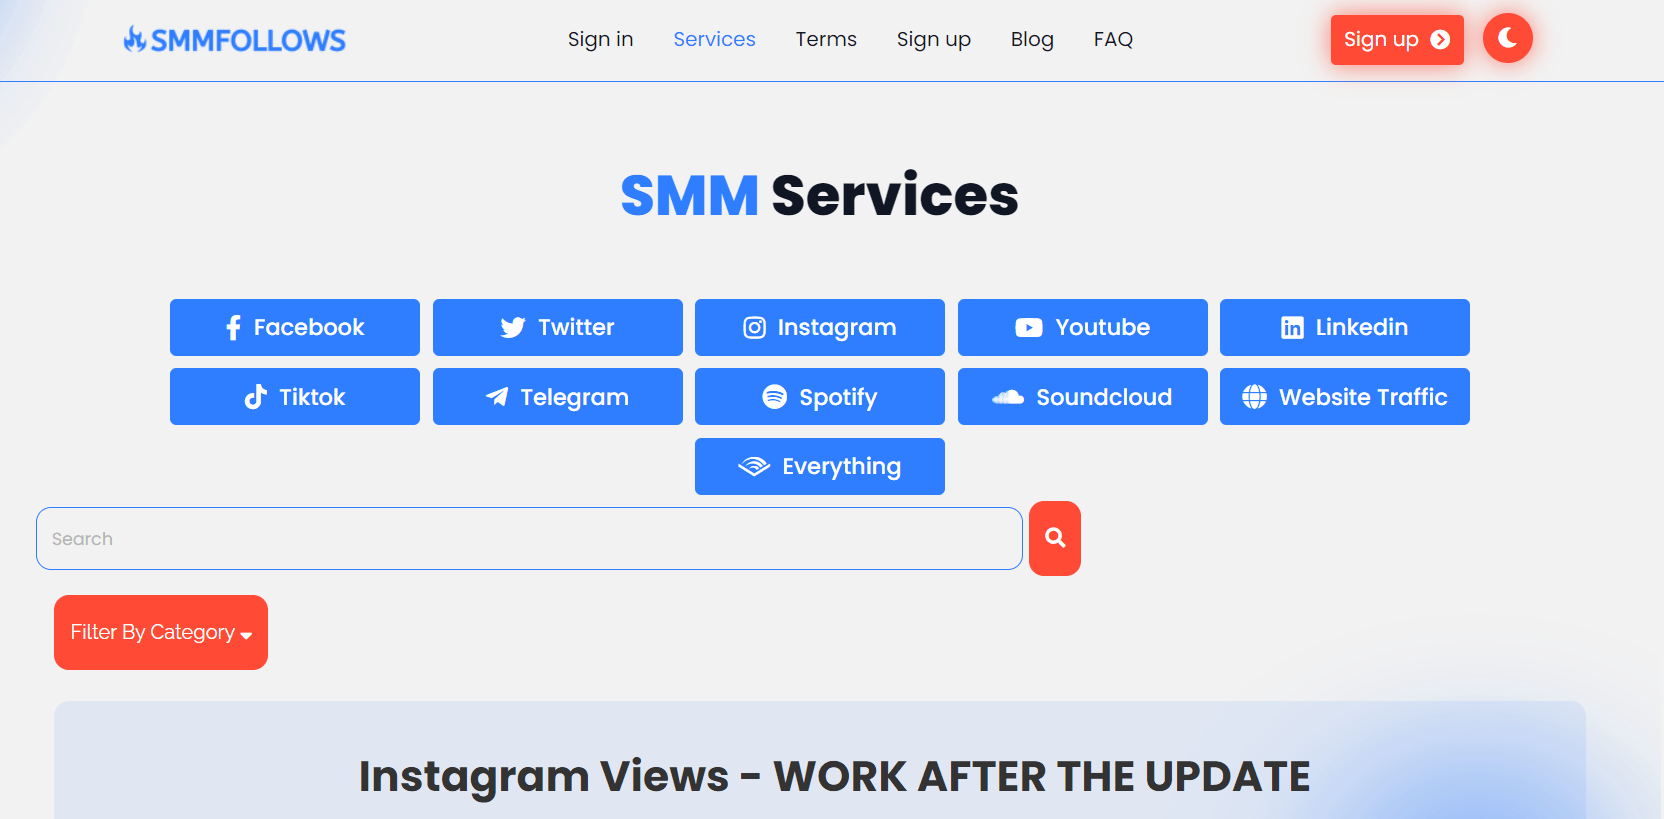 SMMFollows Review - Services